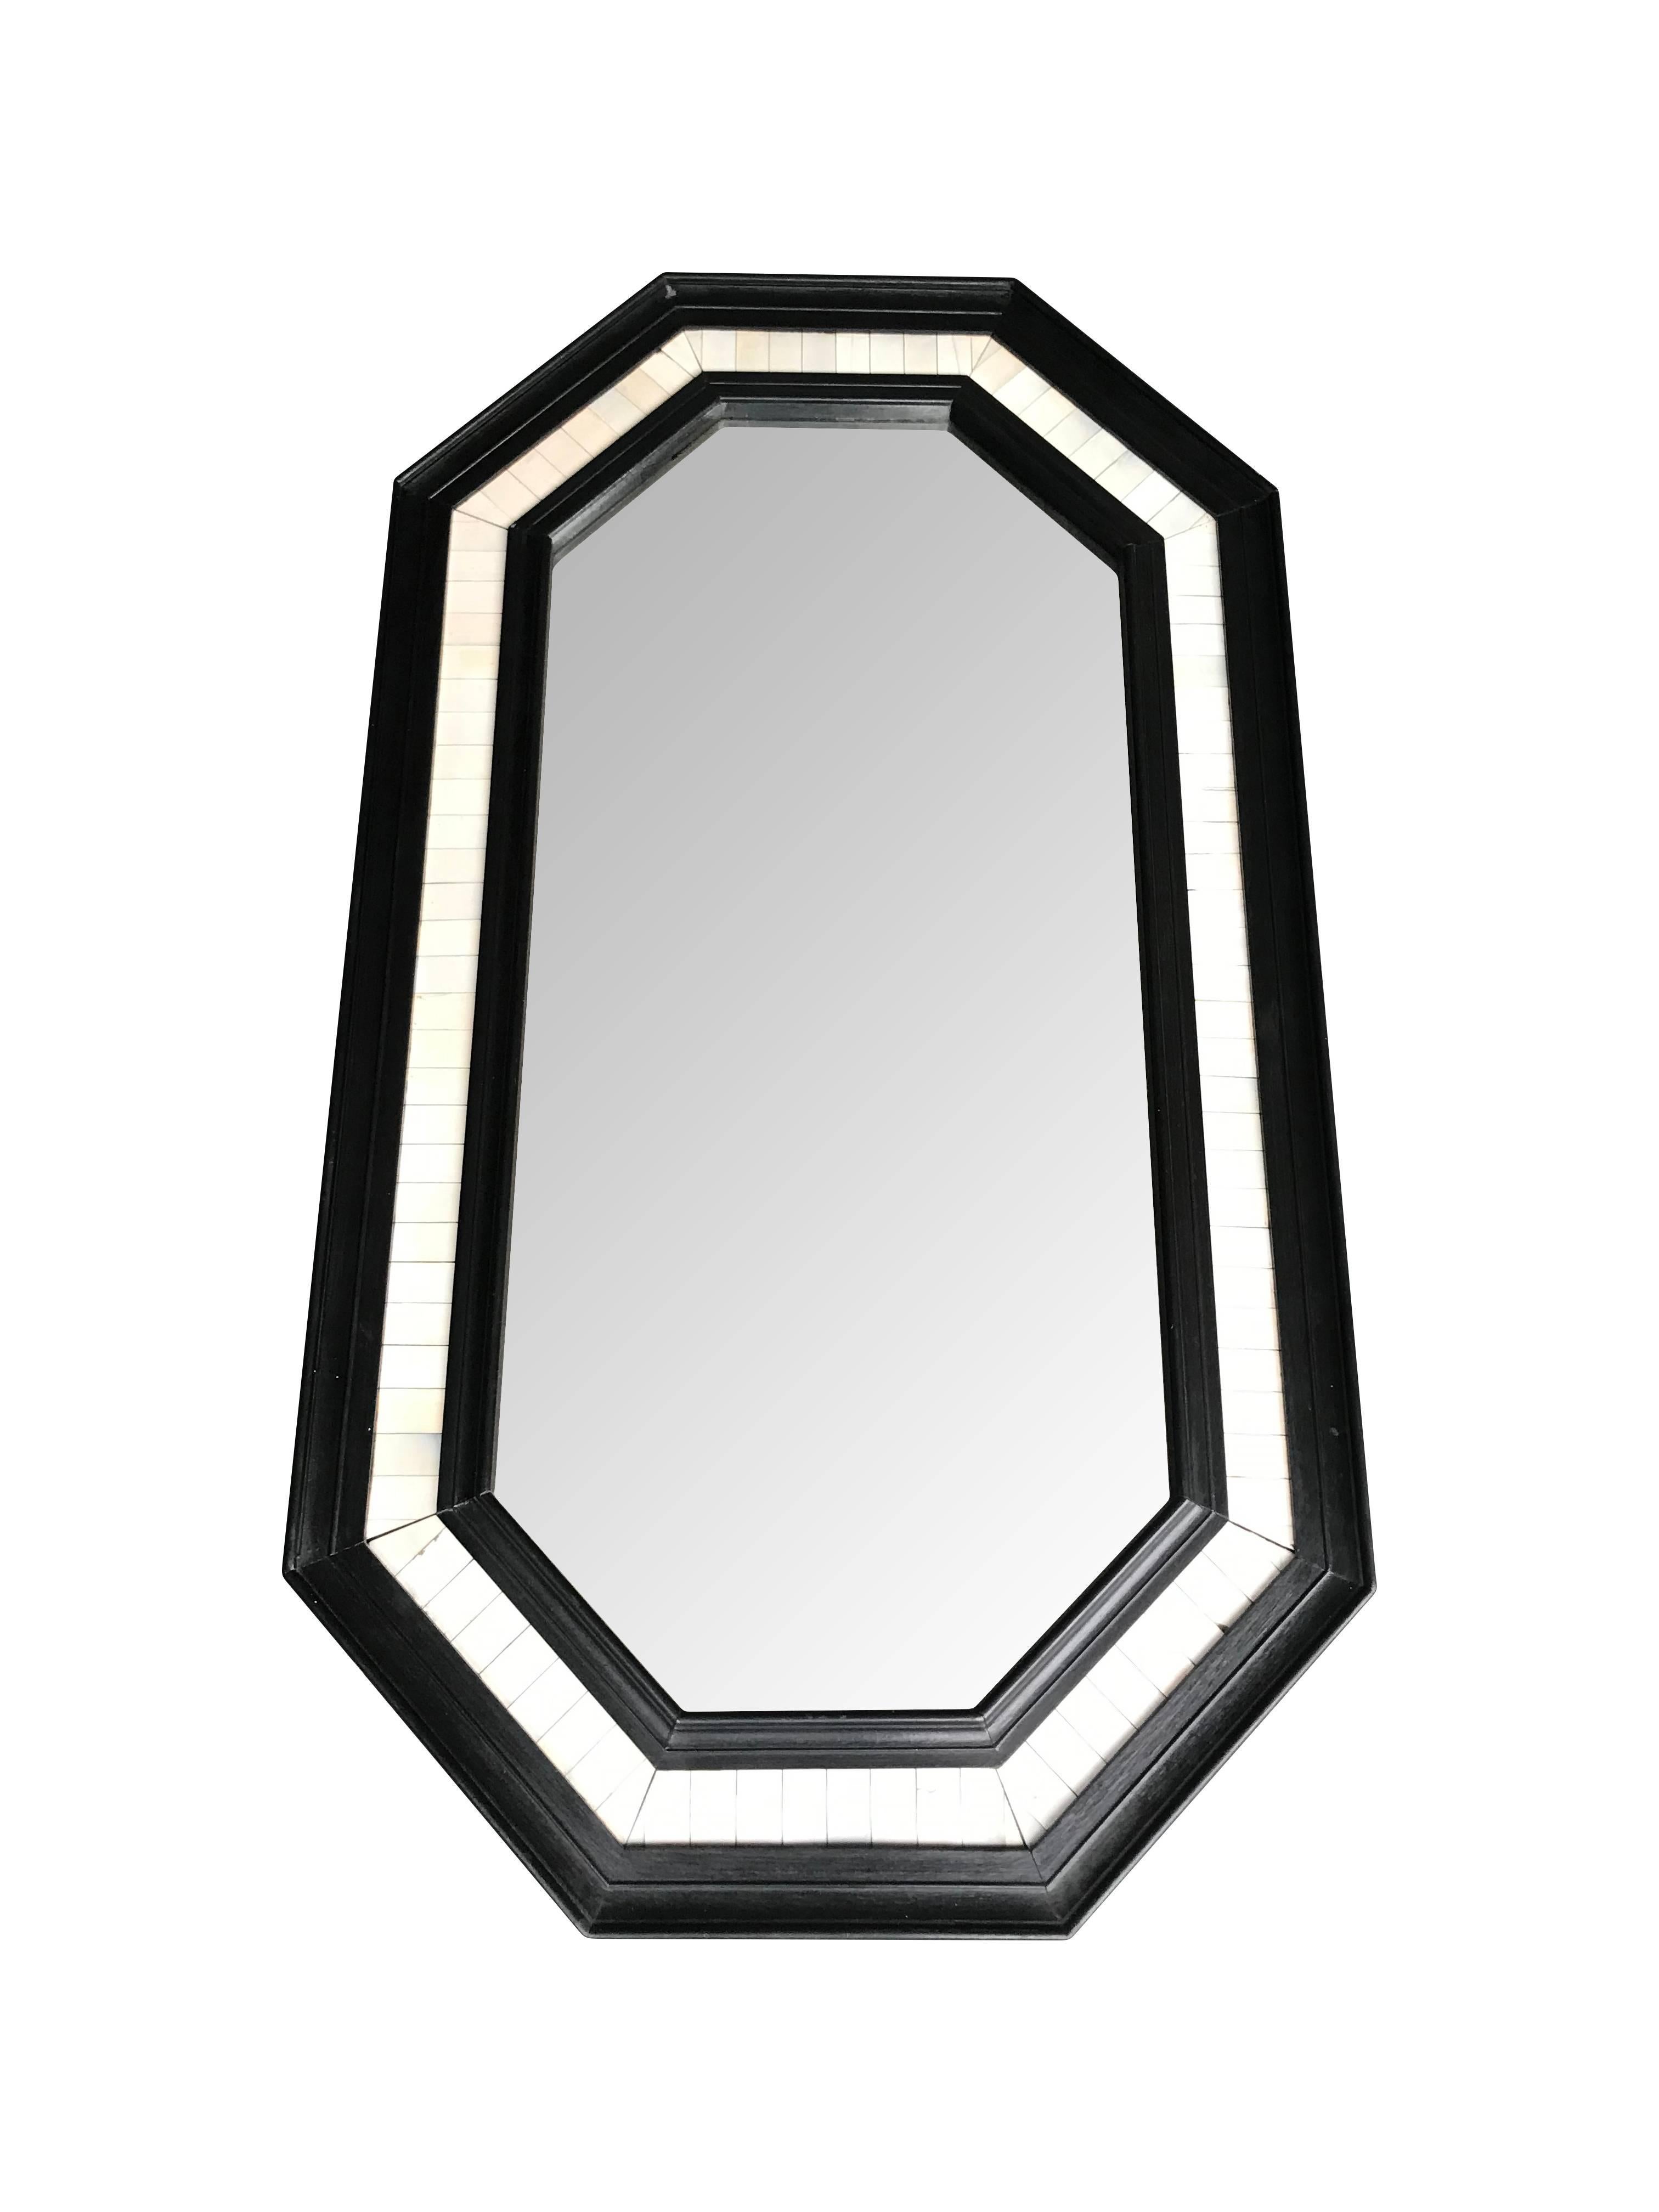 Mid-Century Modern Octagonal Ebonized Wooden Framed Mirror with Bone Inlay Surround